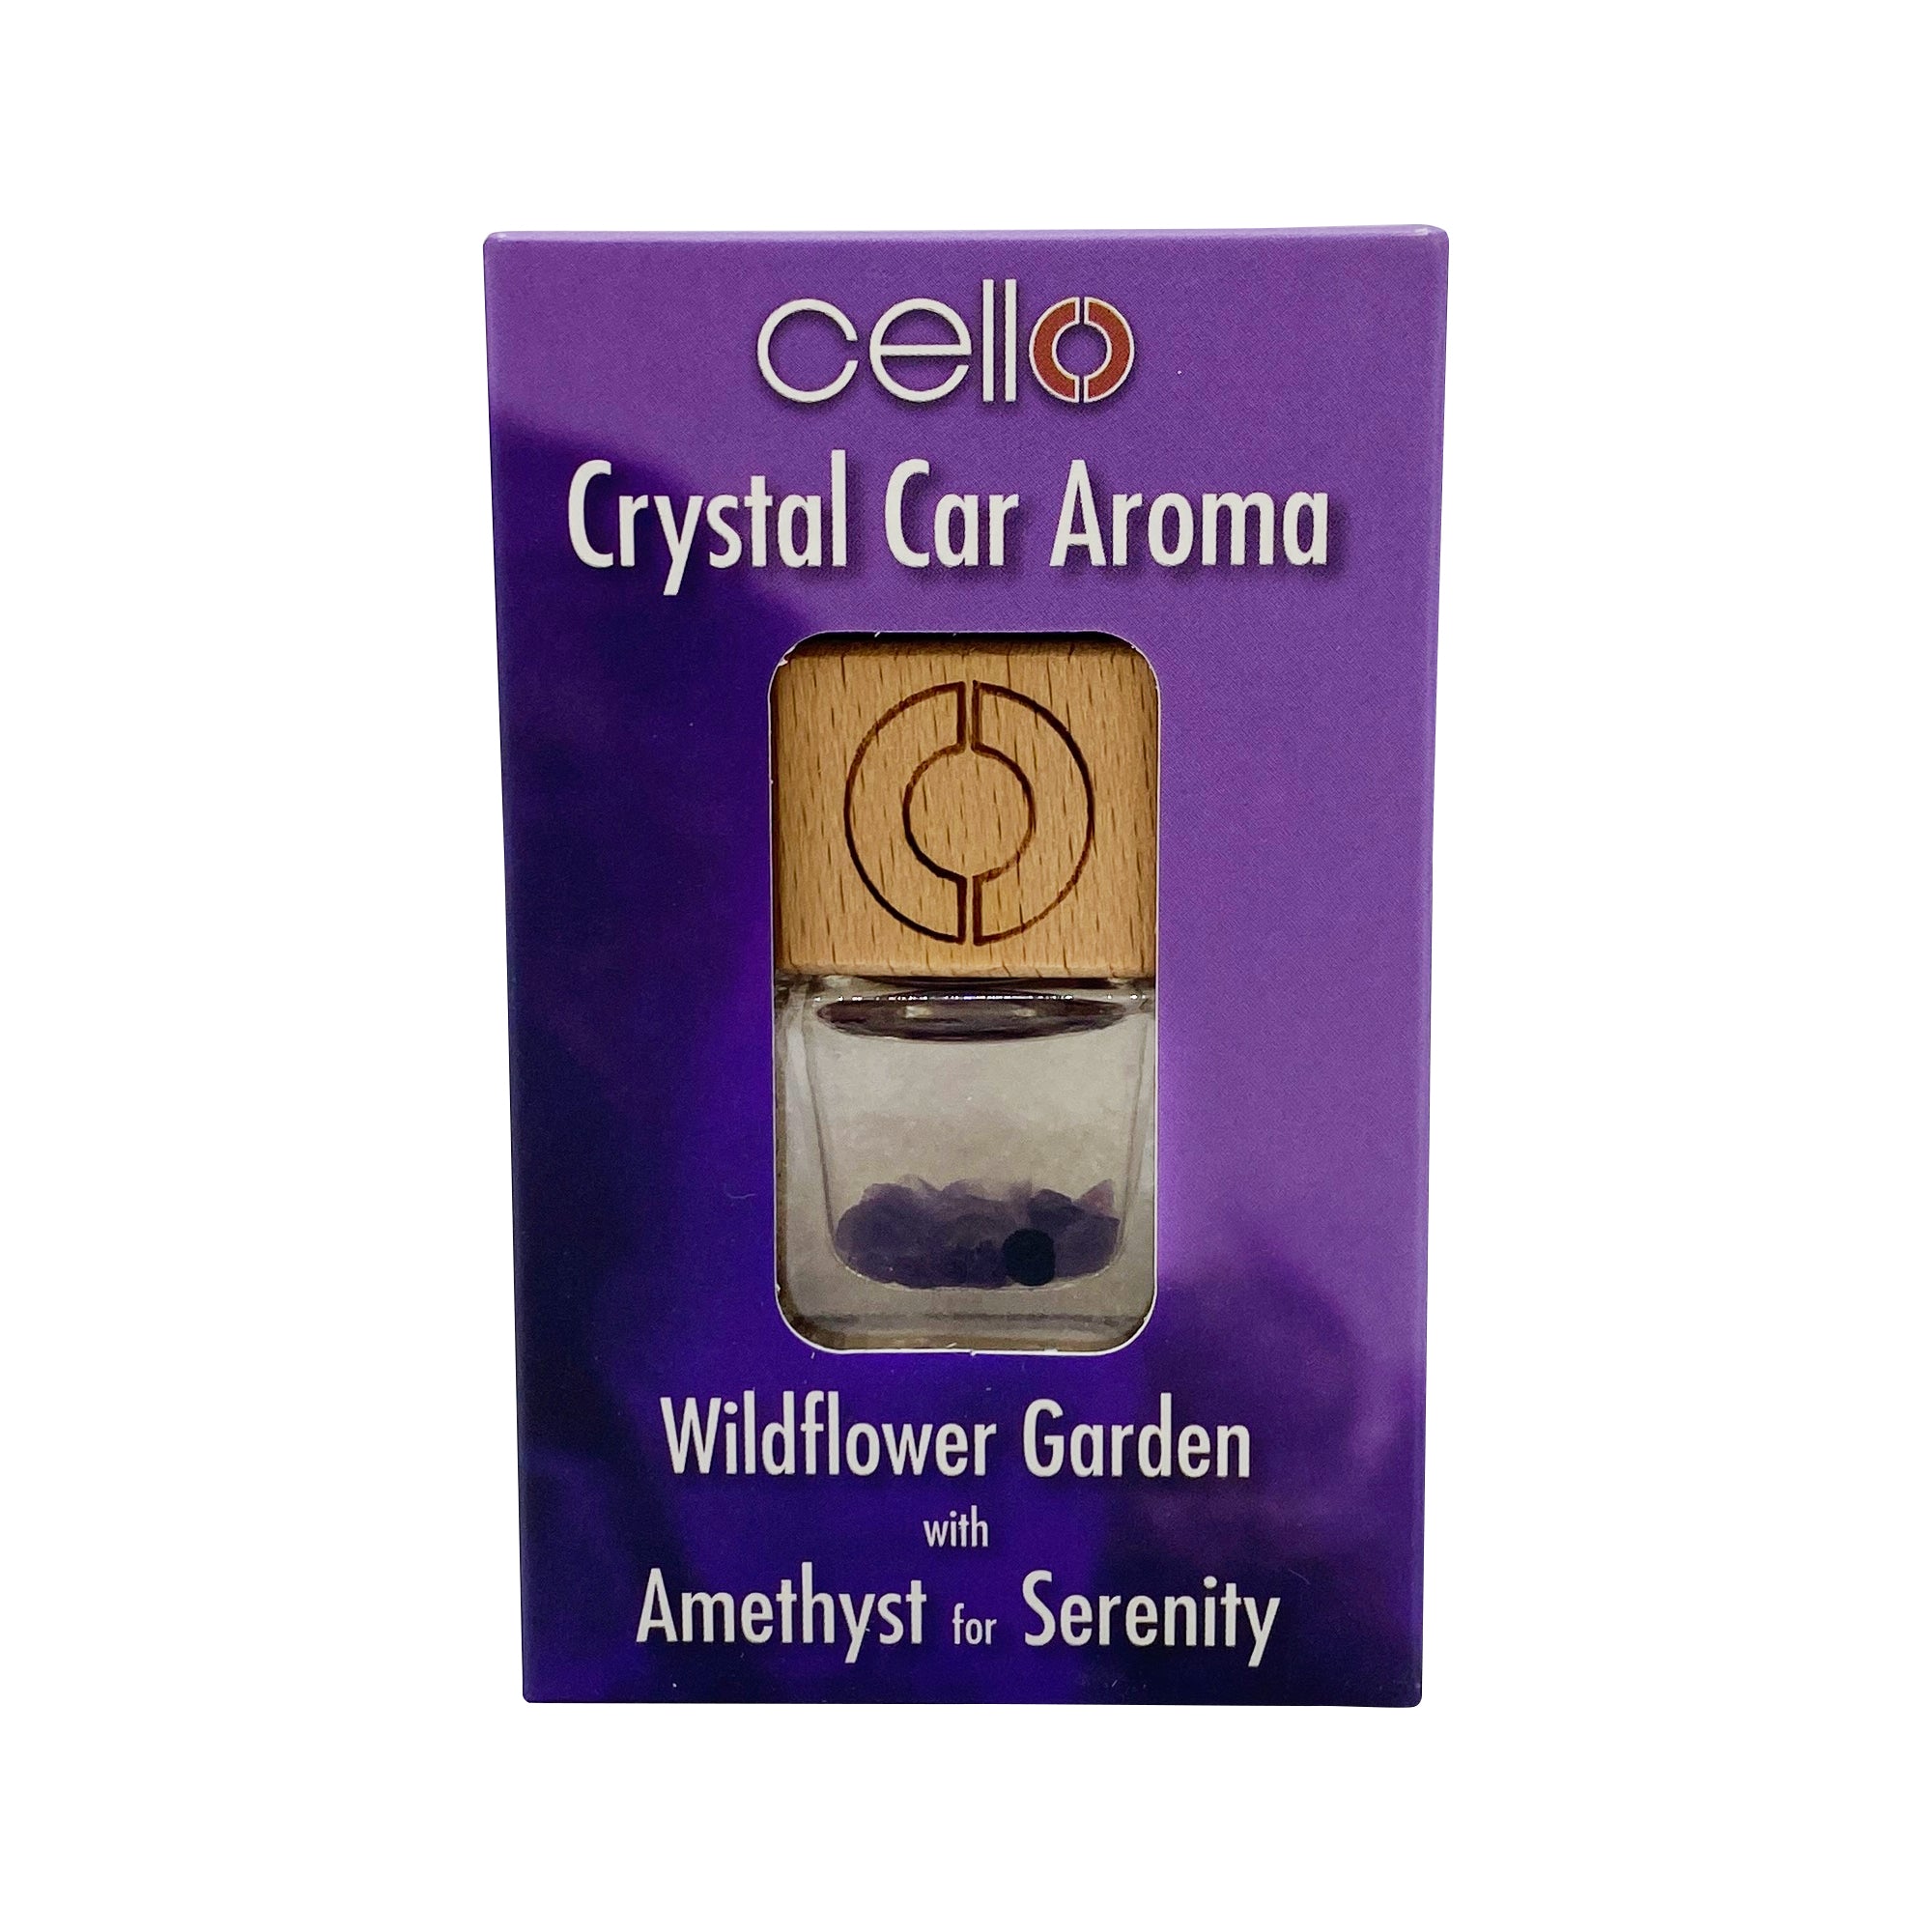 Cello - Crystal Car Aroma - Amethyst - Wildflower Garden